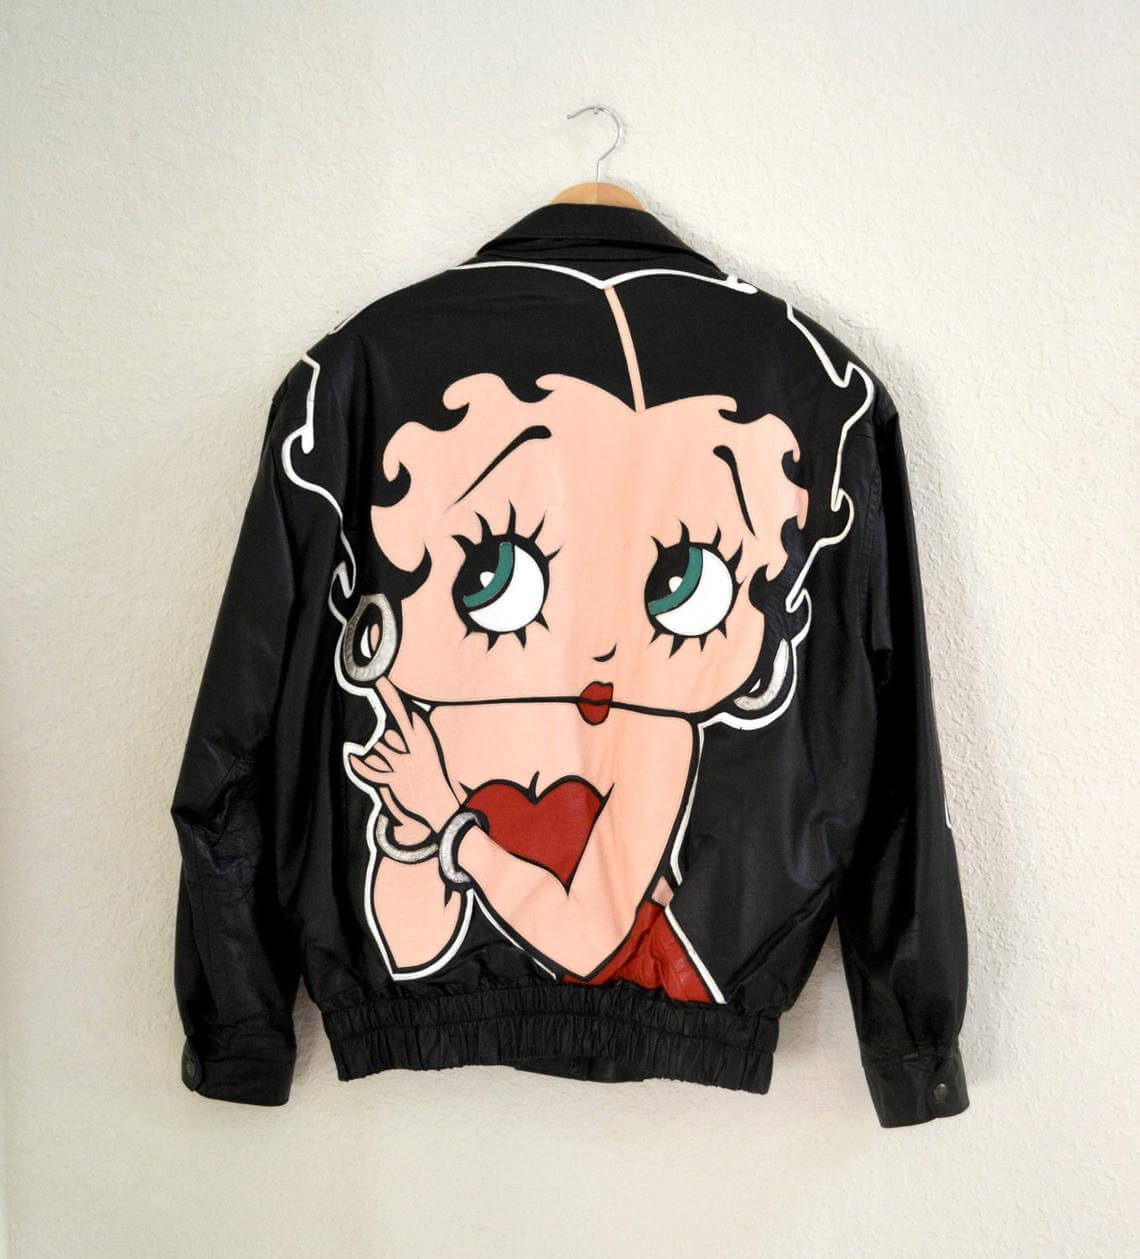 Vintage Black Betty Boop Cartoon Leather Jacket - Maker of Jacket